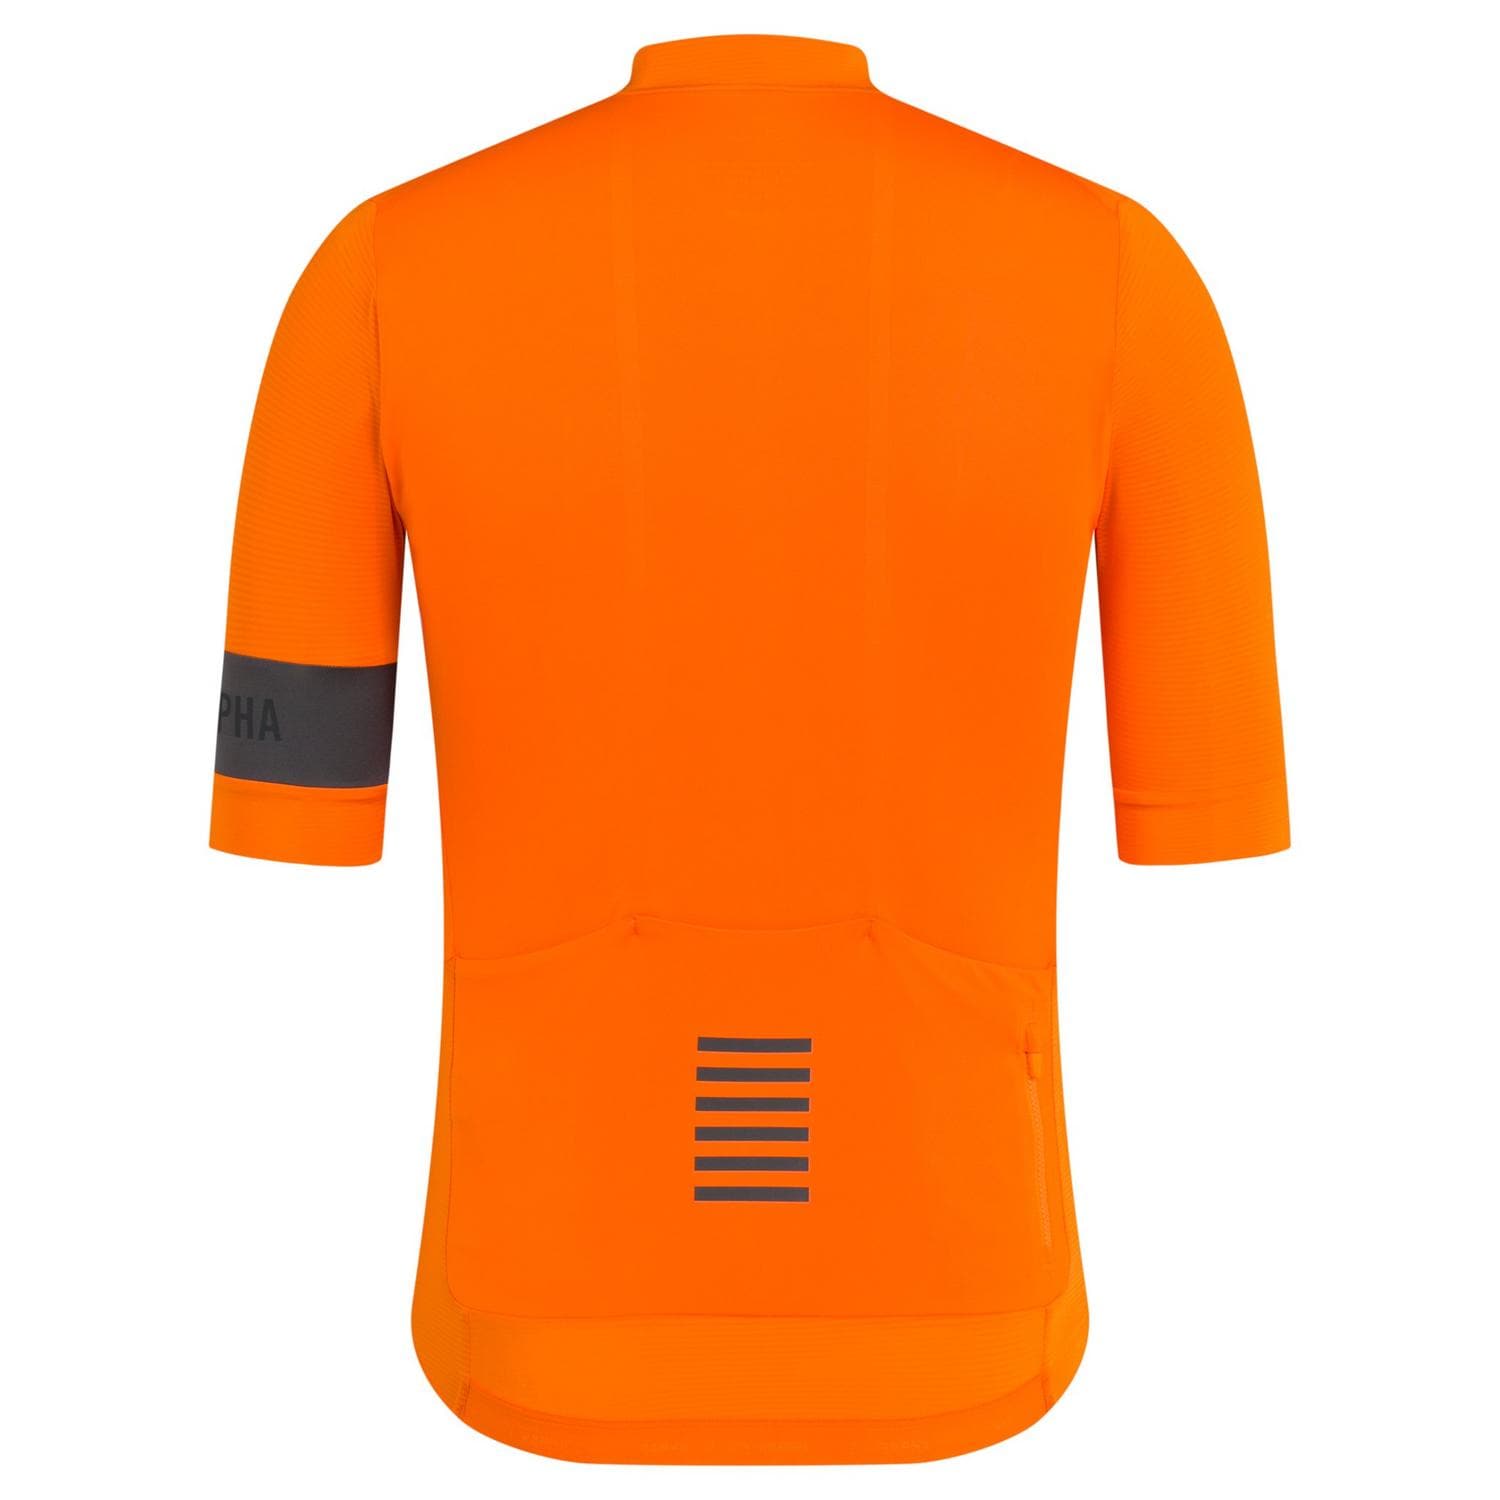 Rapha Pro Team Jersey - Orange Default Rapha 